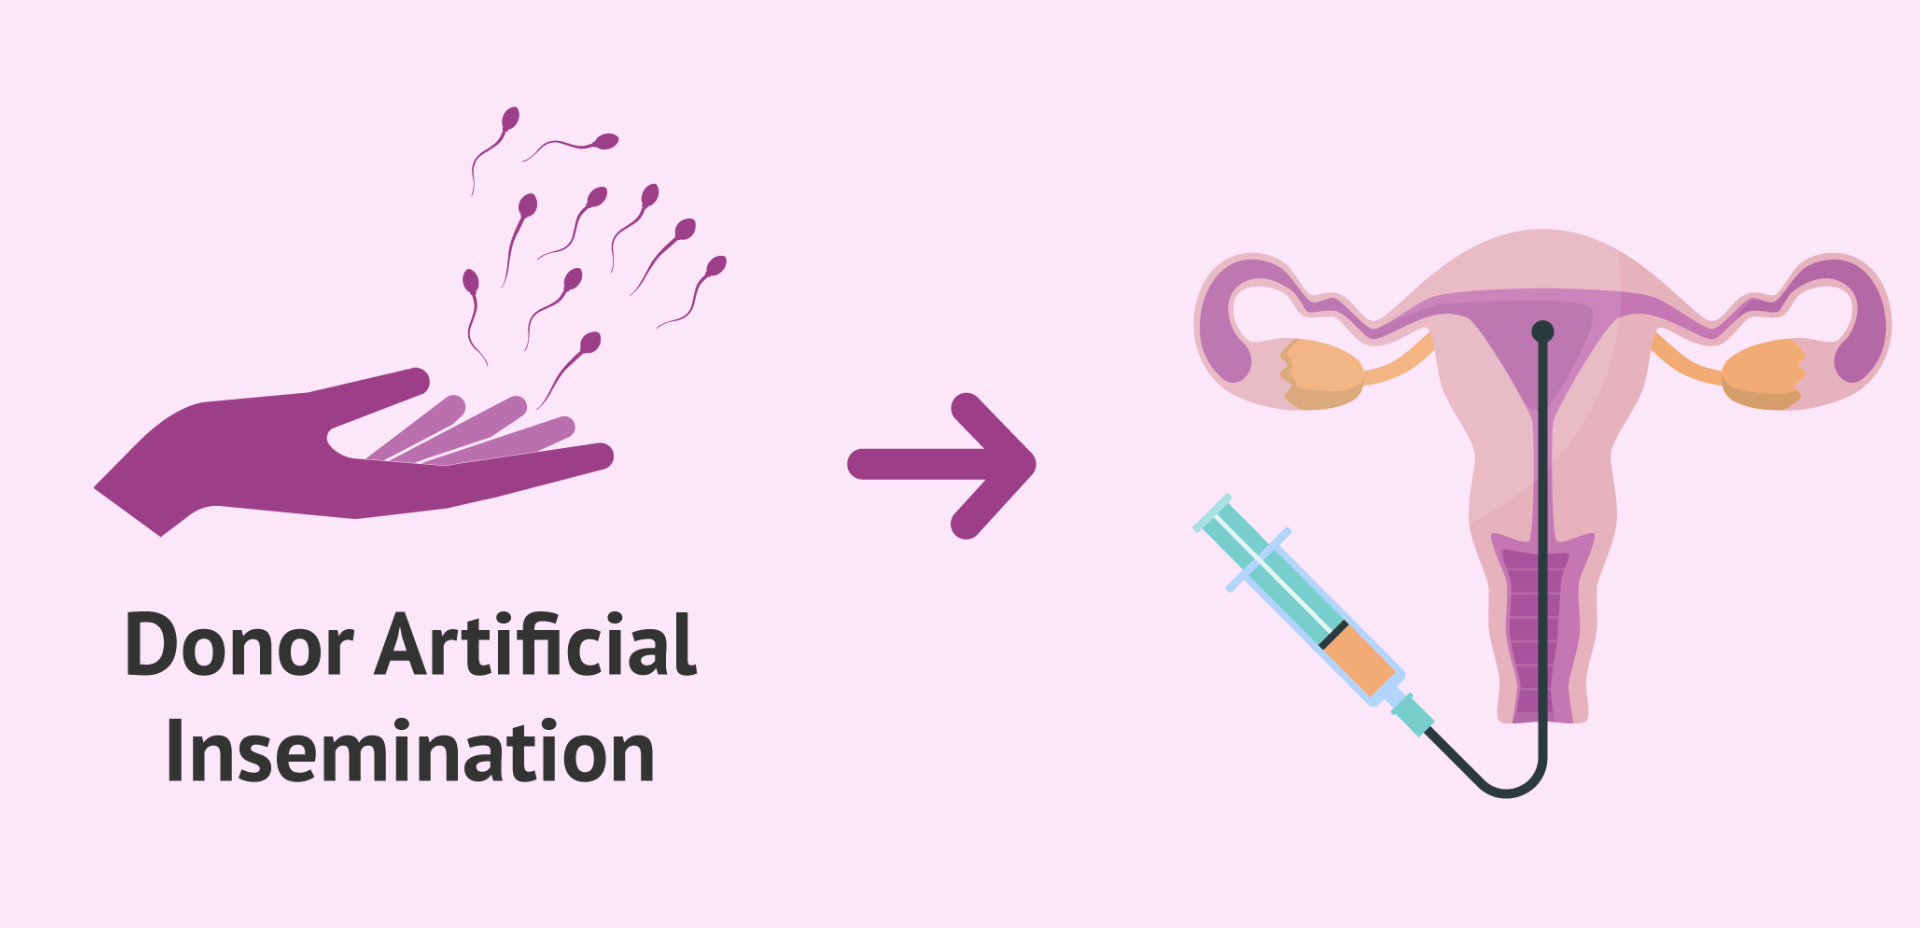 Donor intrauterine insemination illustration